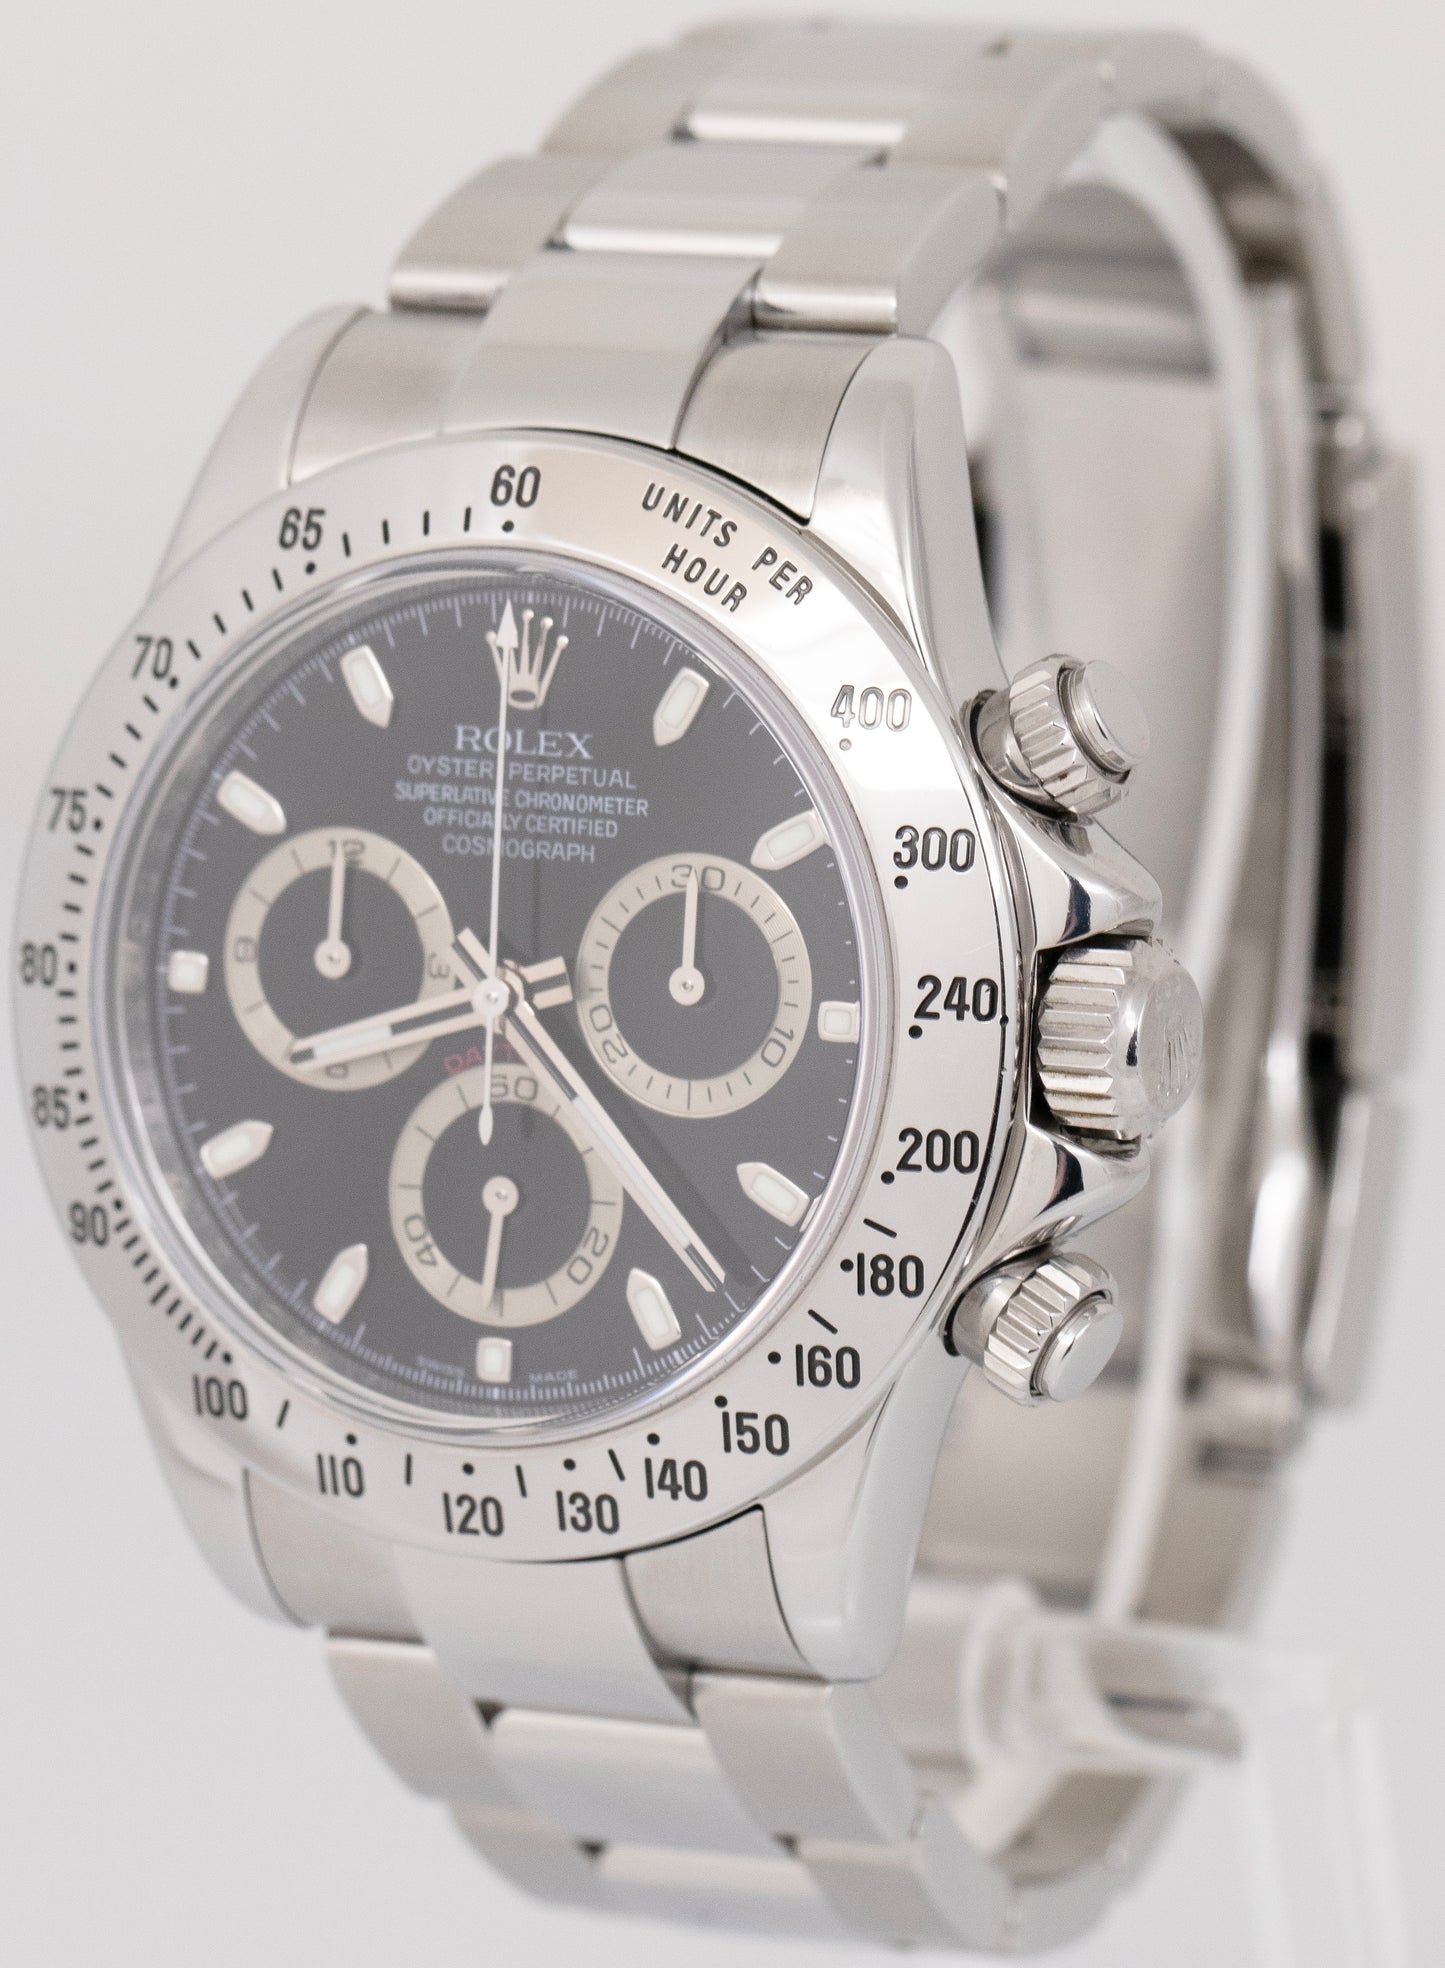 MINT PAPERS Rolex Daytona Cosmograph Black Steel 40mm RSC Watch 116520 BOX